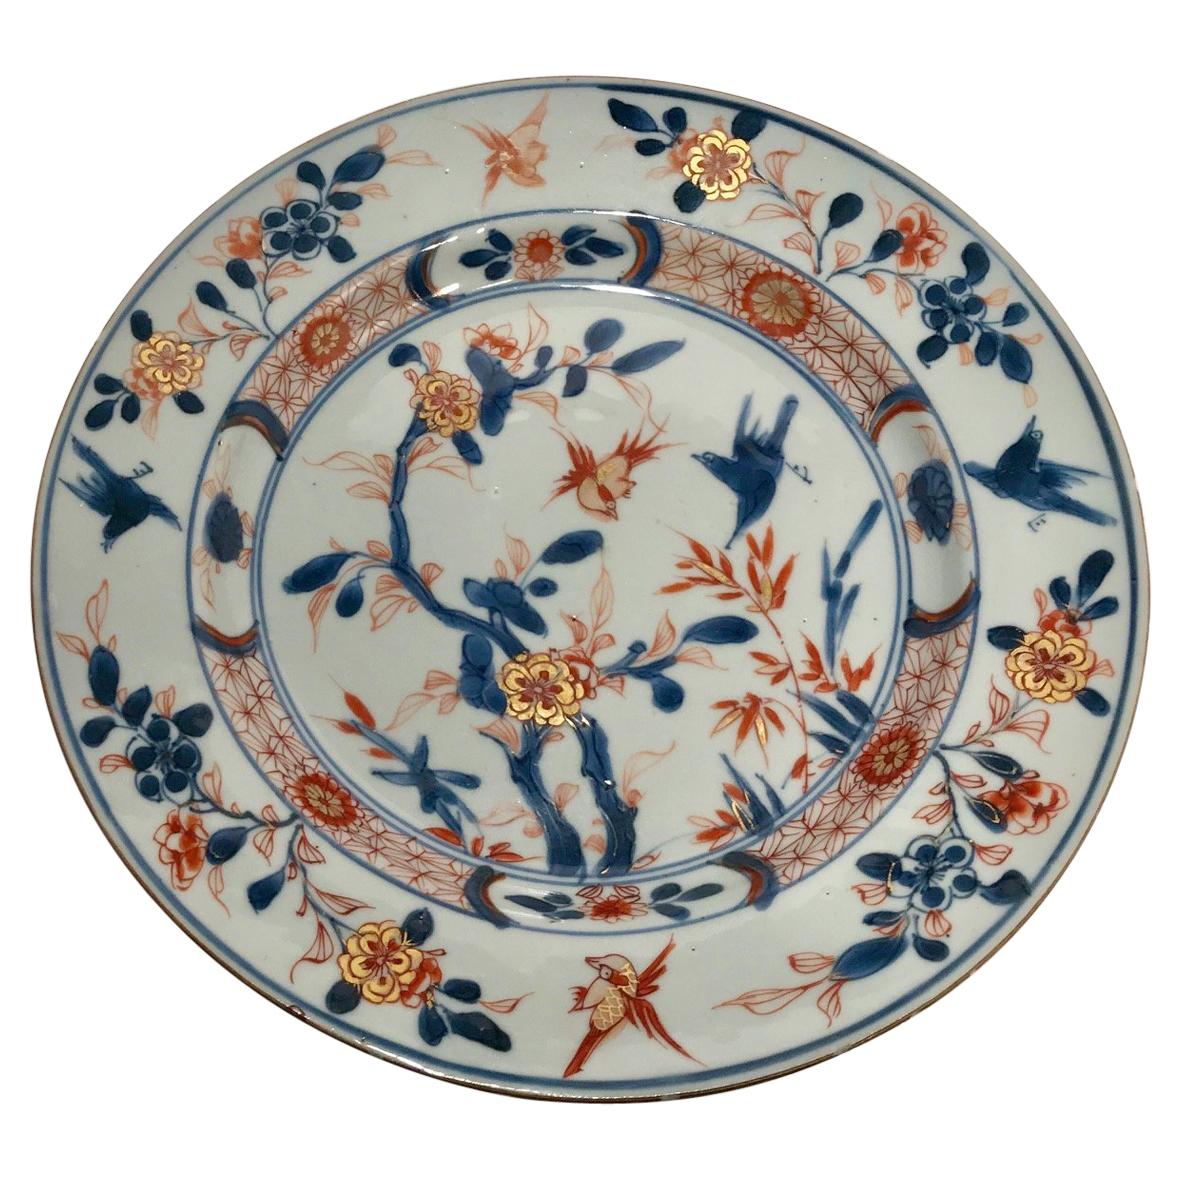  Chinese Imari Export Porcelain Plate